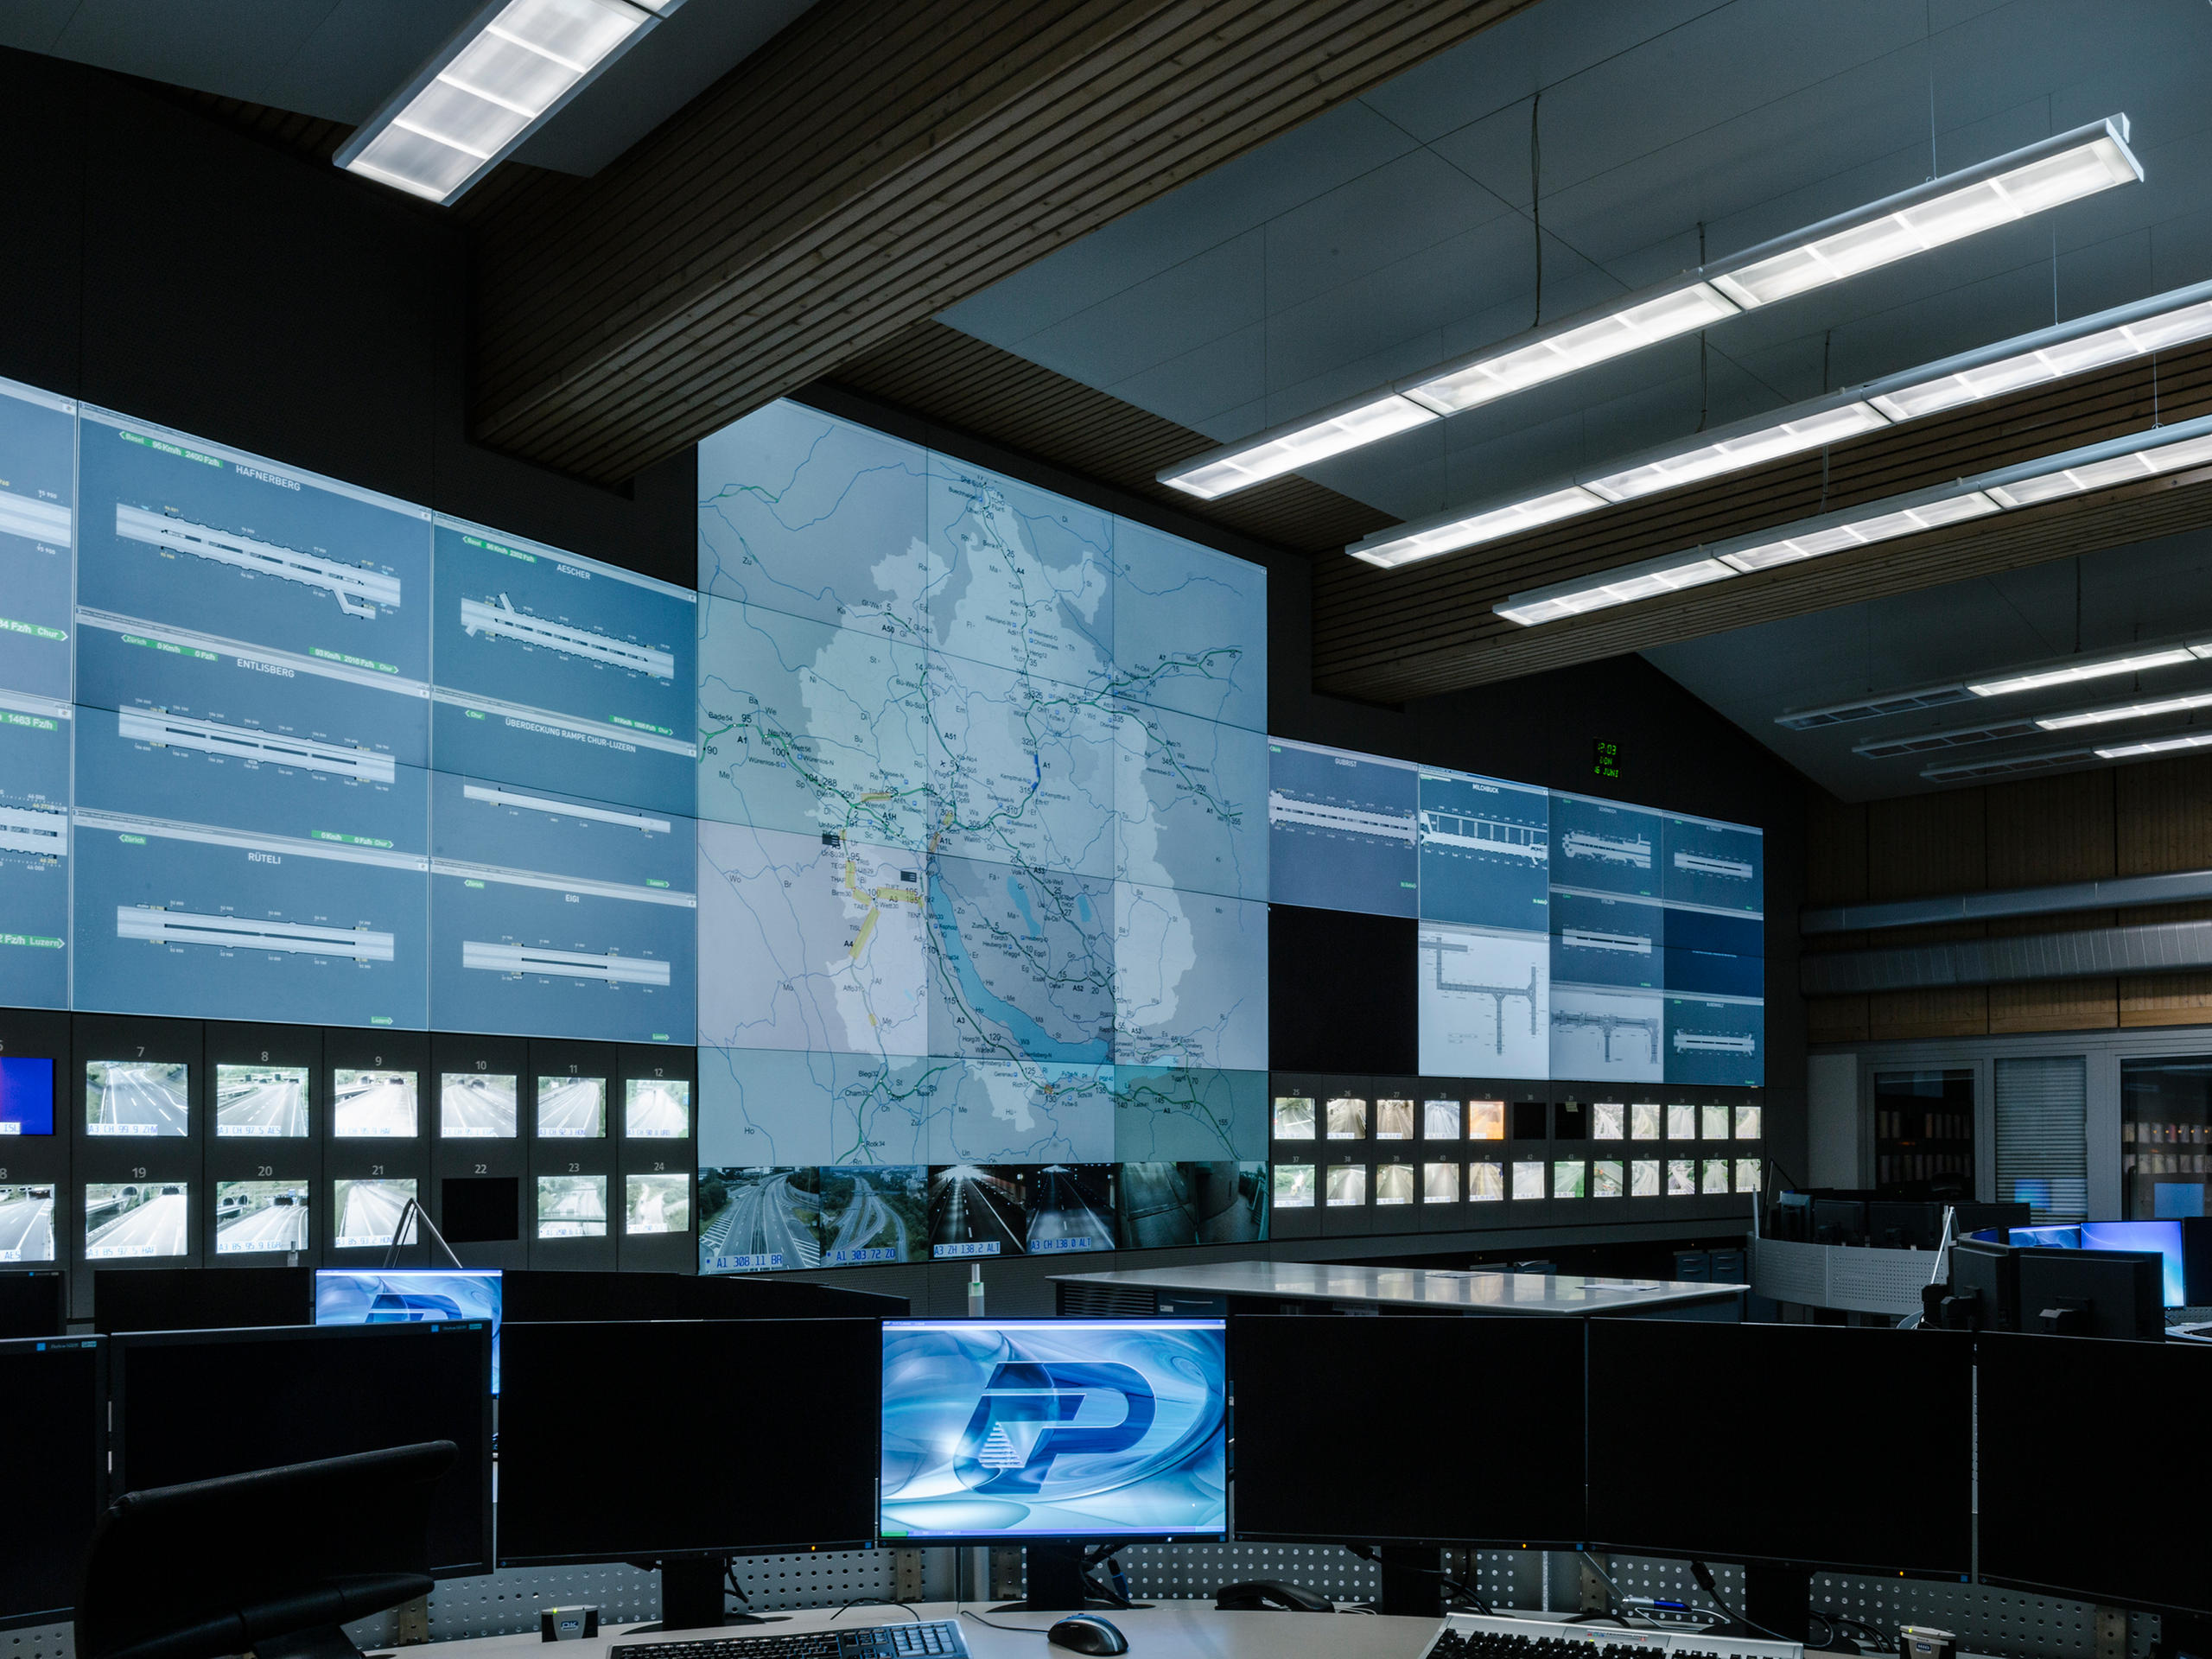 Zurich police monitoring screens